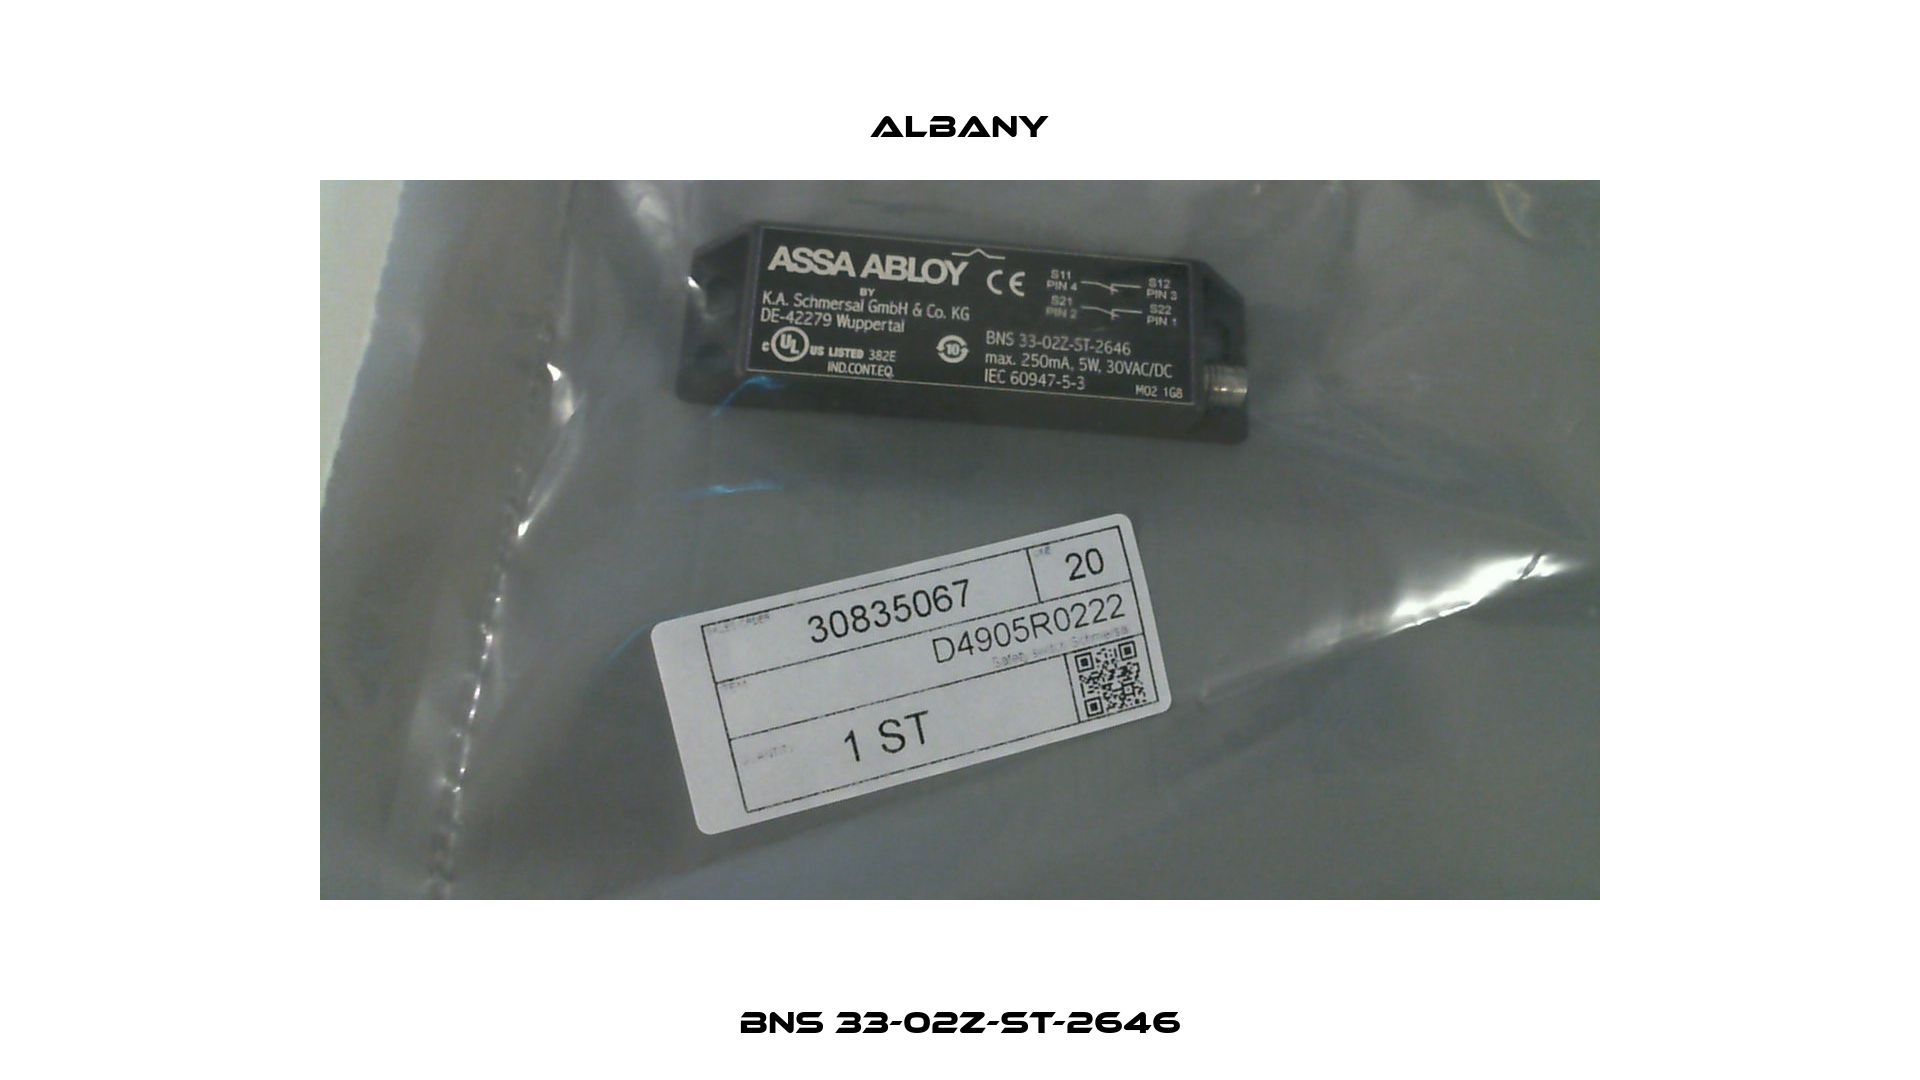 BNS 33-02z-ST-2646 Albany